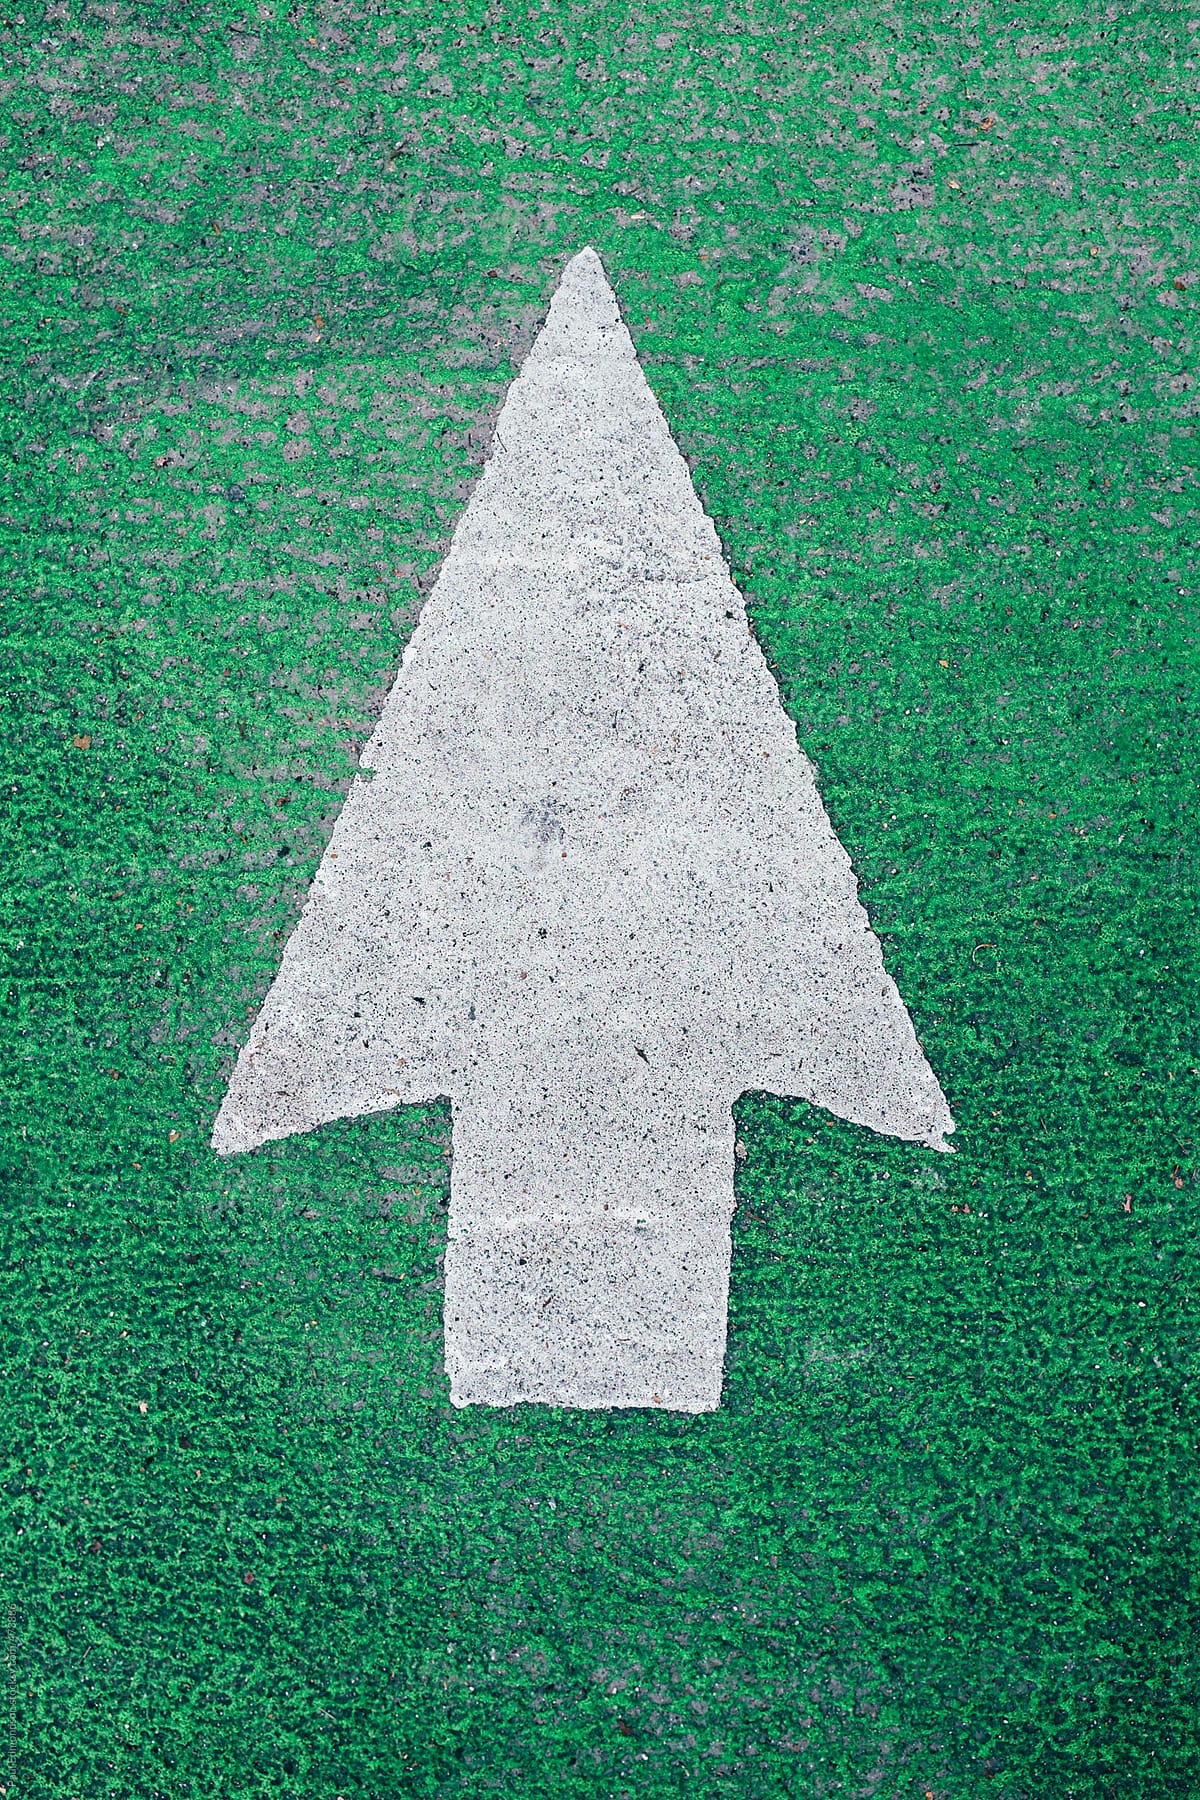 Arrow symbol on urban street and bike lane